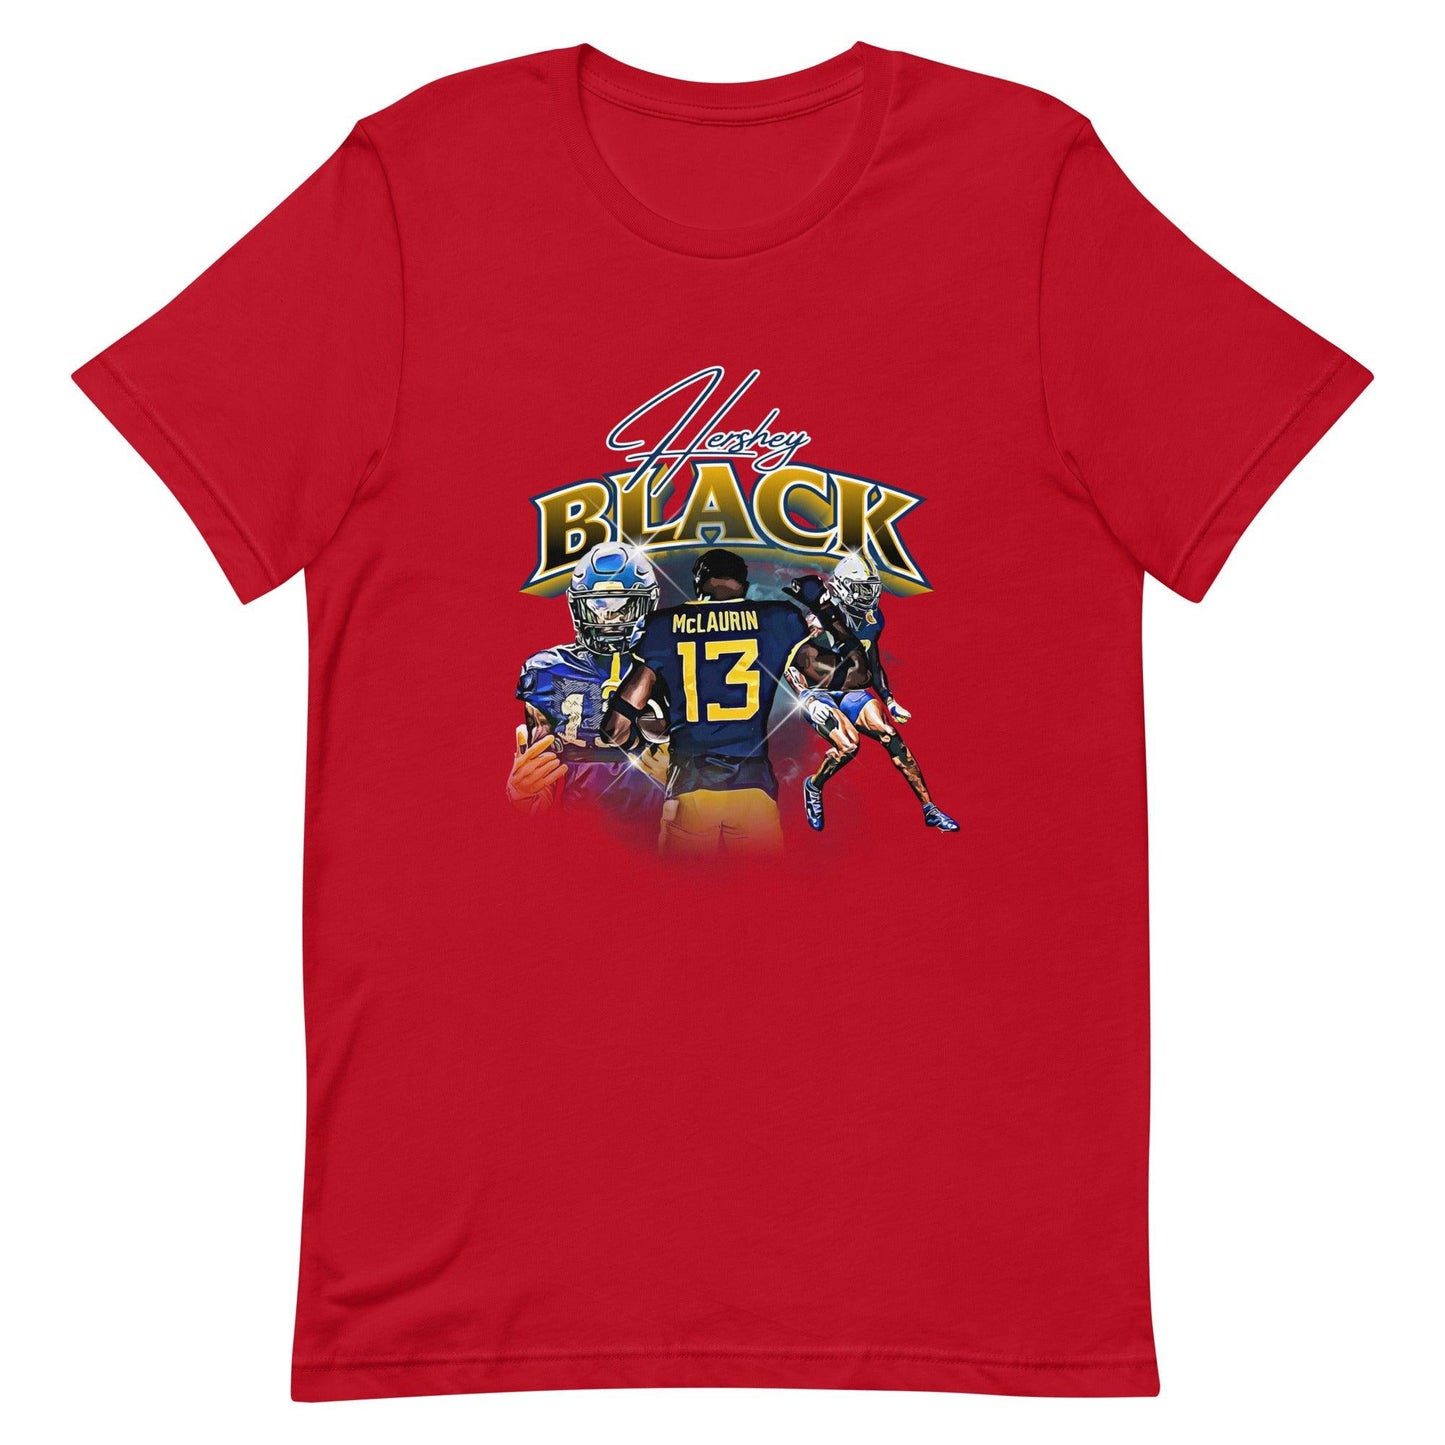 Hershey Black “Heritage” t-shirt - Fan Arch